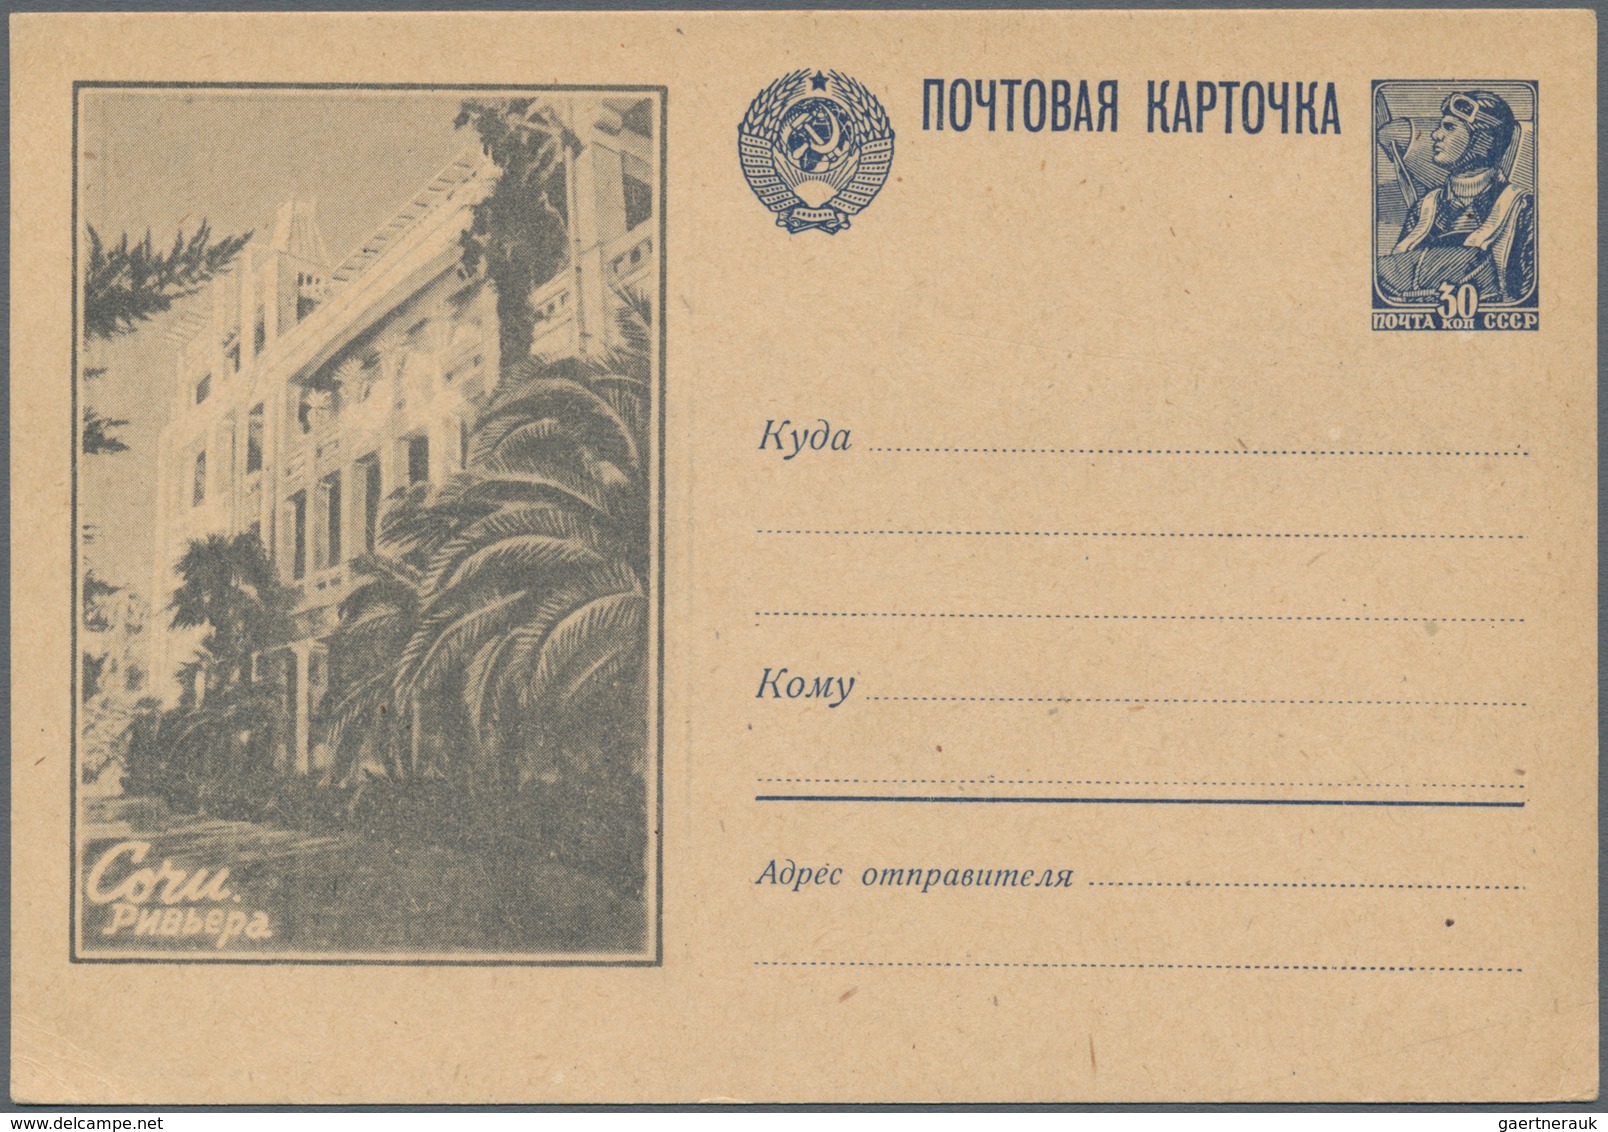 Sowjetunion - Ganzsachen: 1945/7, 9 picture postcards of the 6th regular issue propaganda Stalin vie